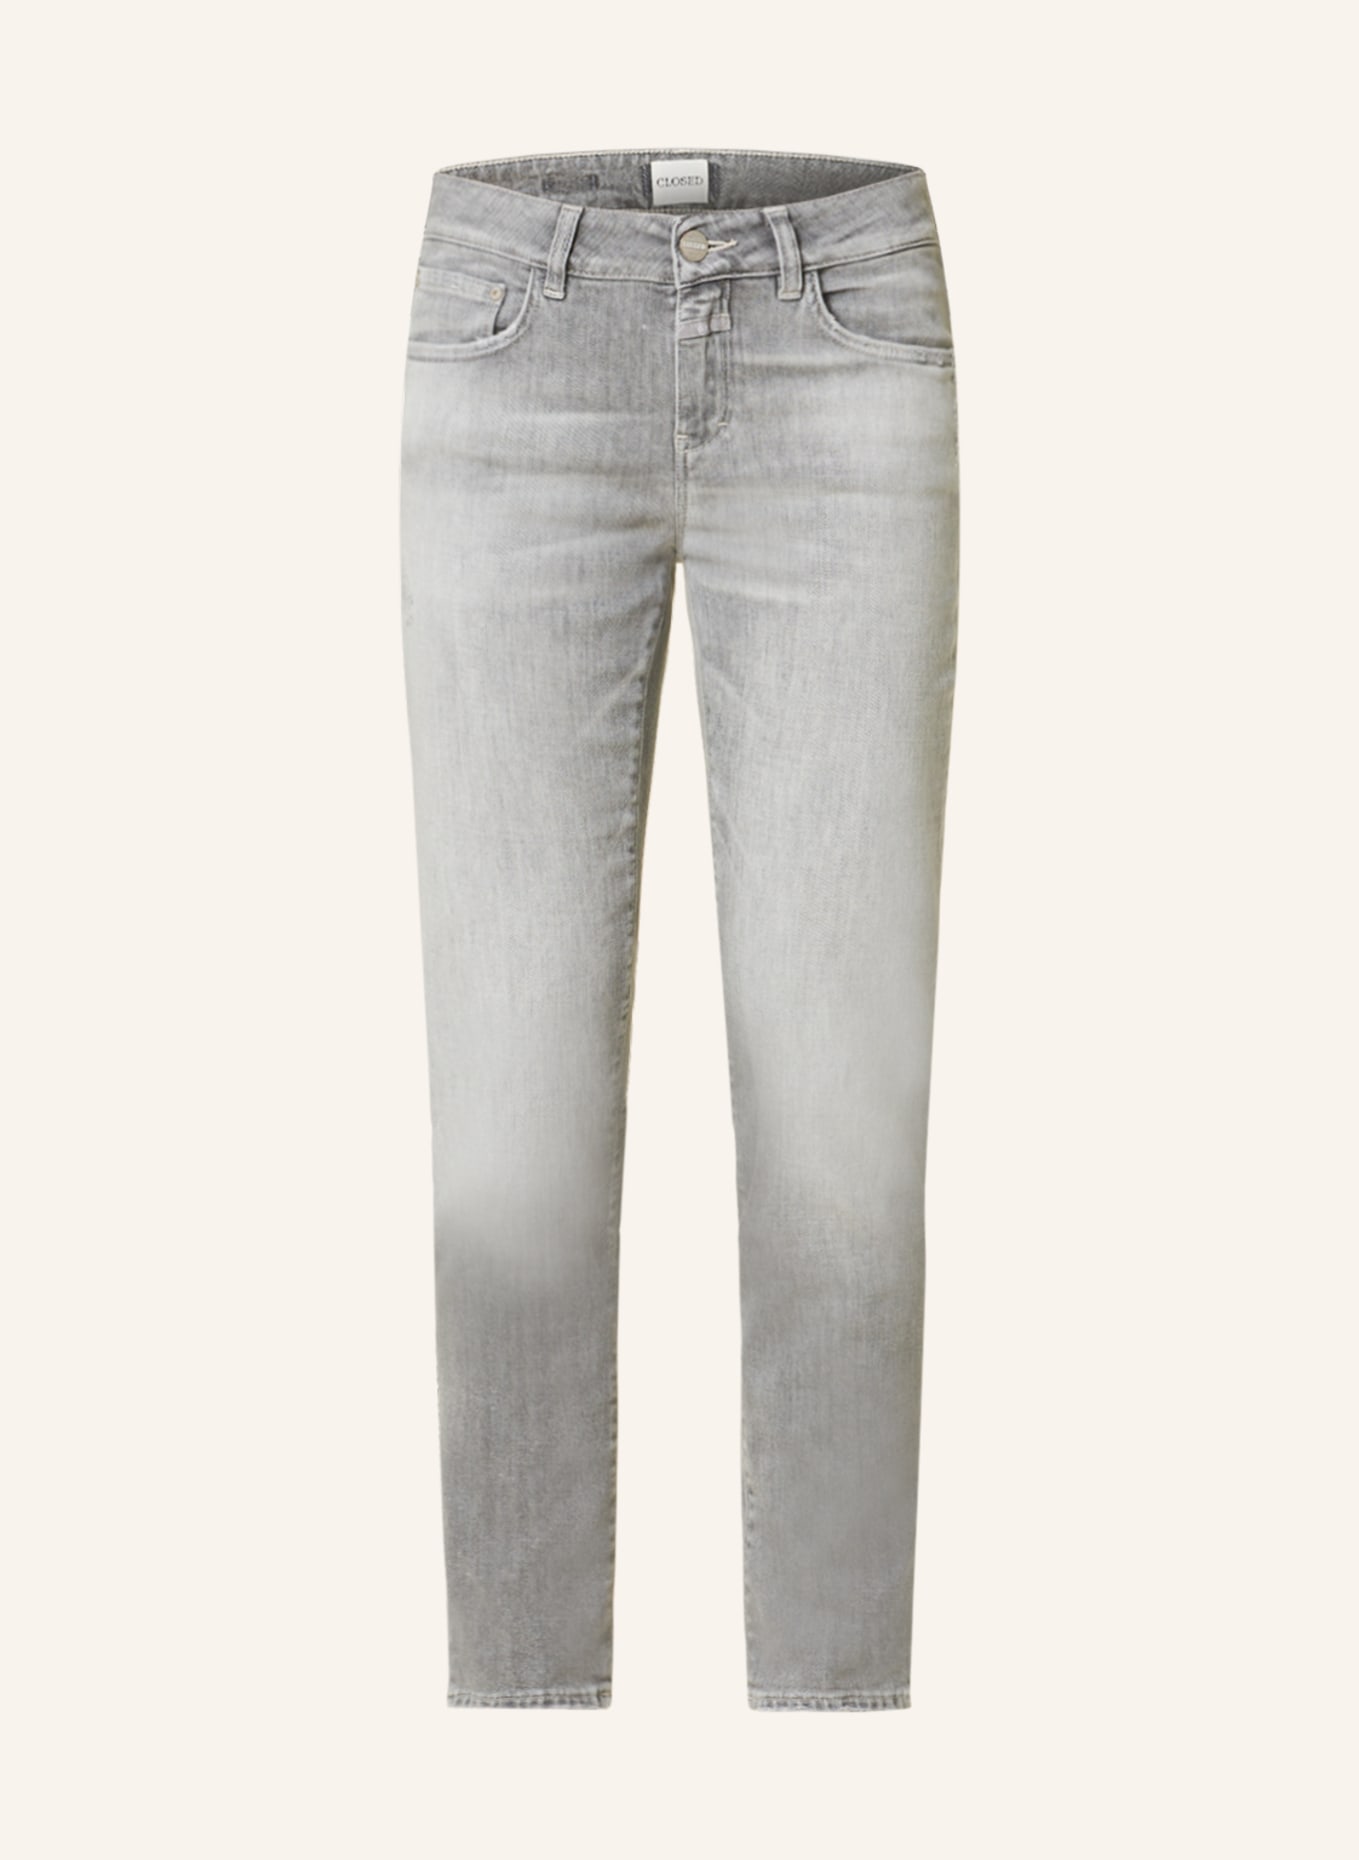 CLOSED Jeans BAKER, Farbe: LGY LIGHT GREY (Bild 1)